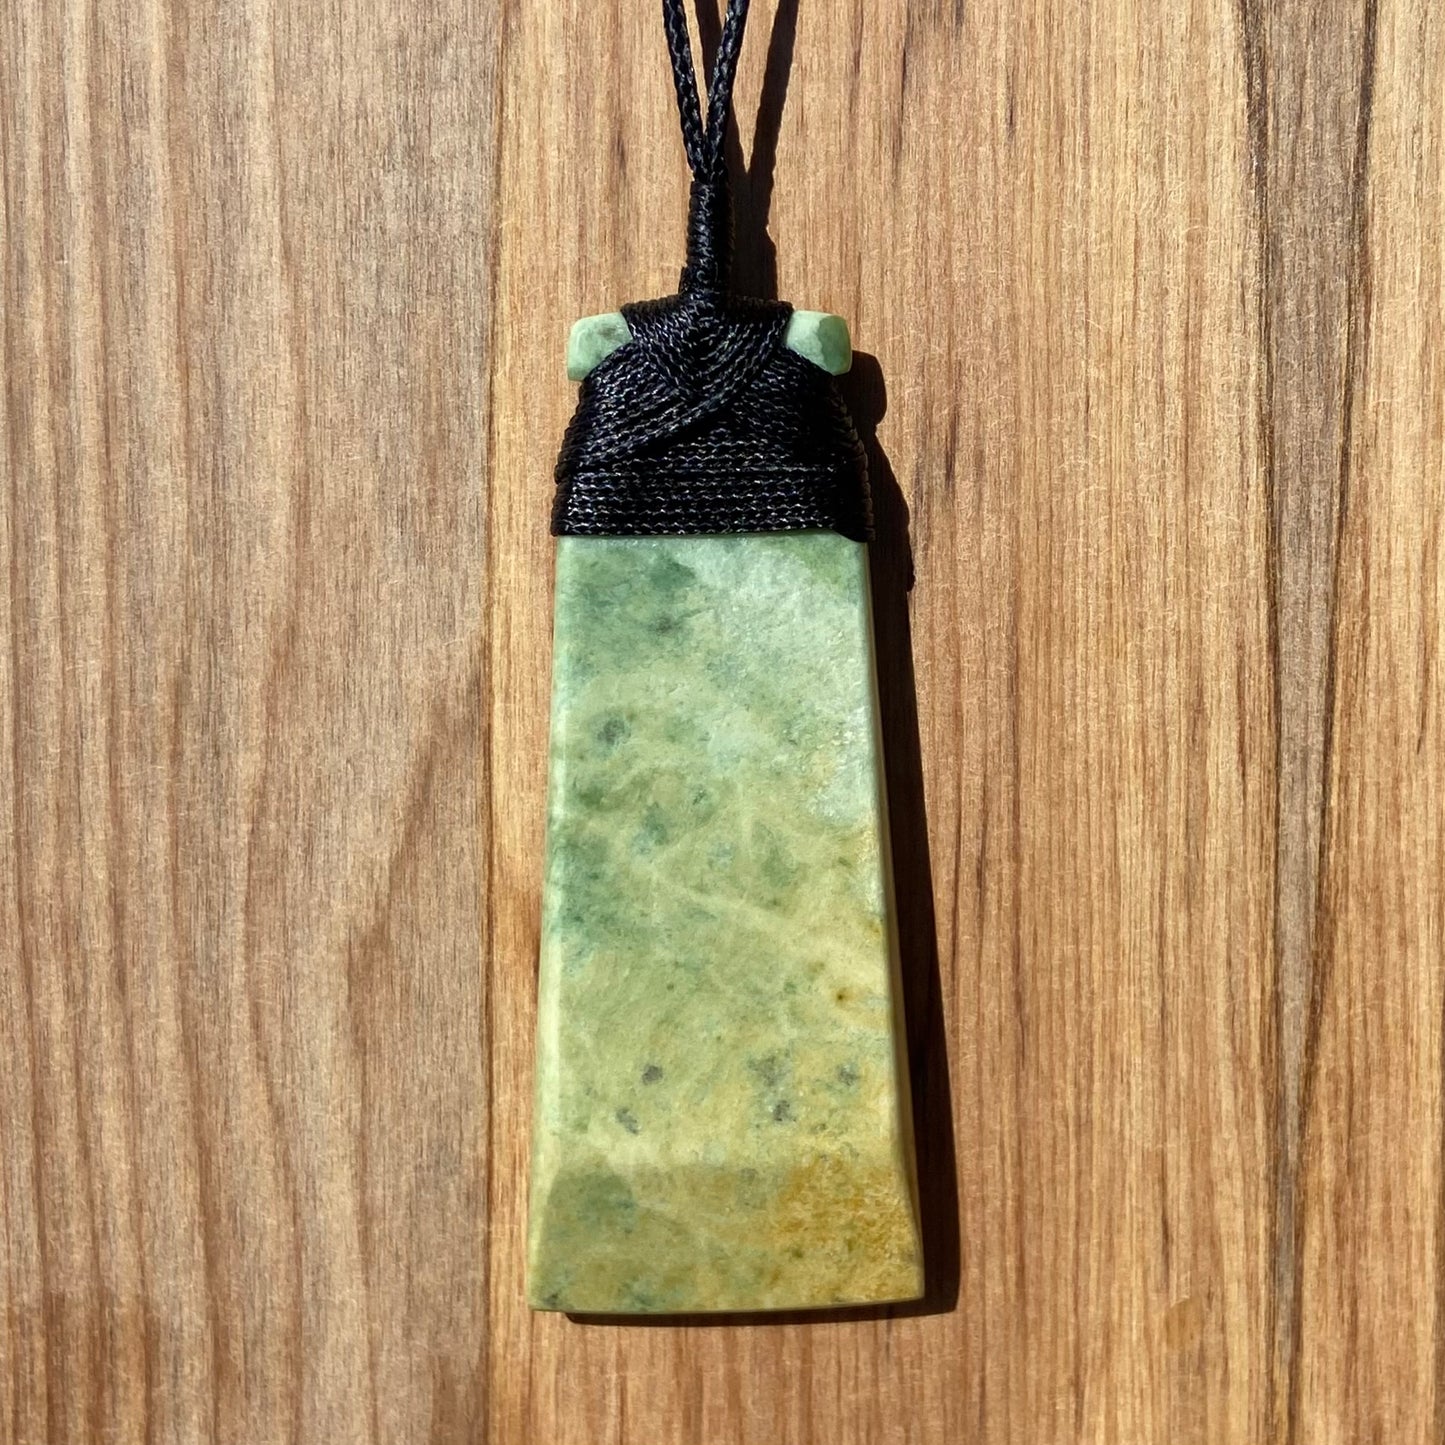 Bound toki pendant hand-carved from New Zealand flower jade/ pounamu (greenstone). Back.